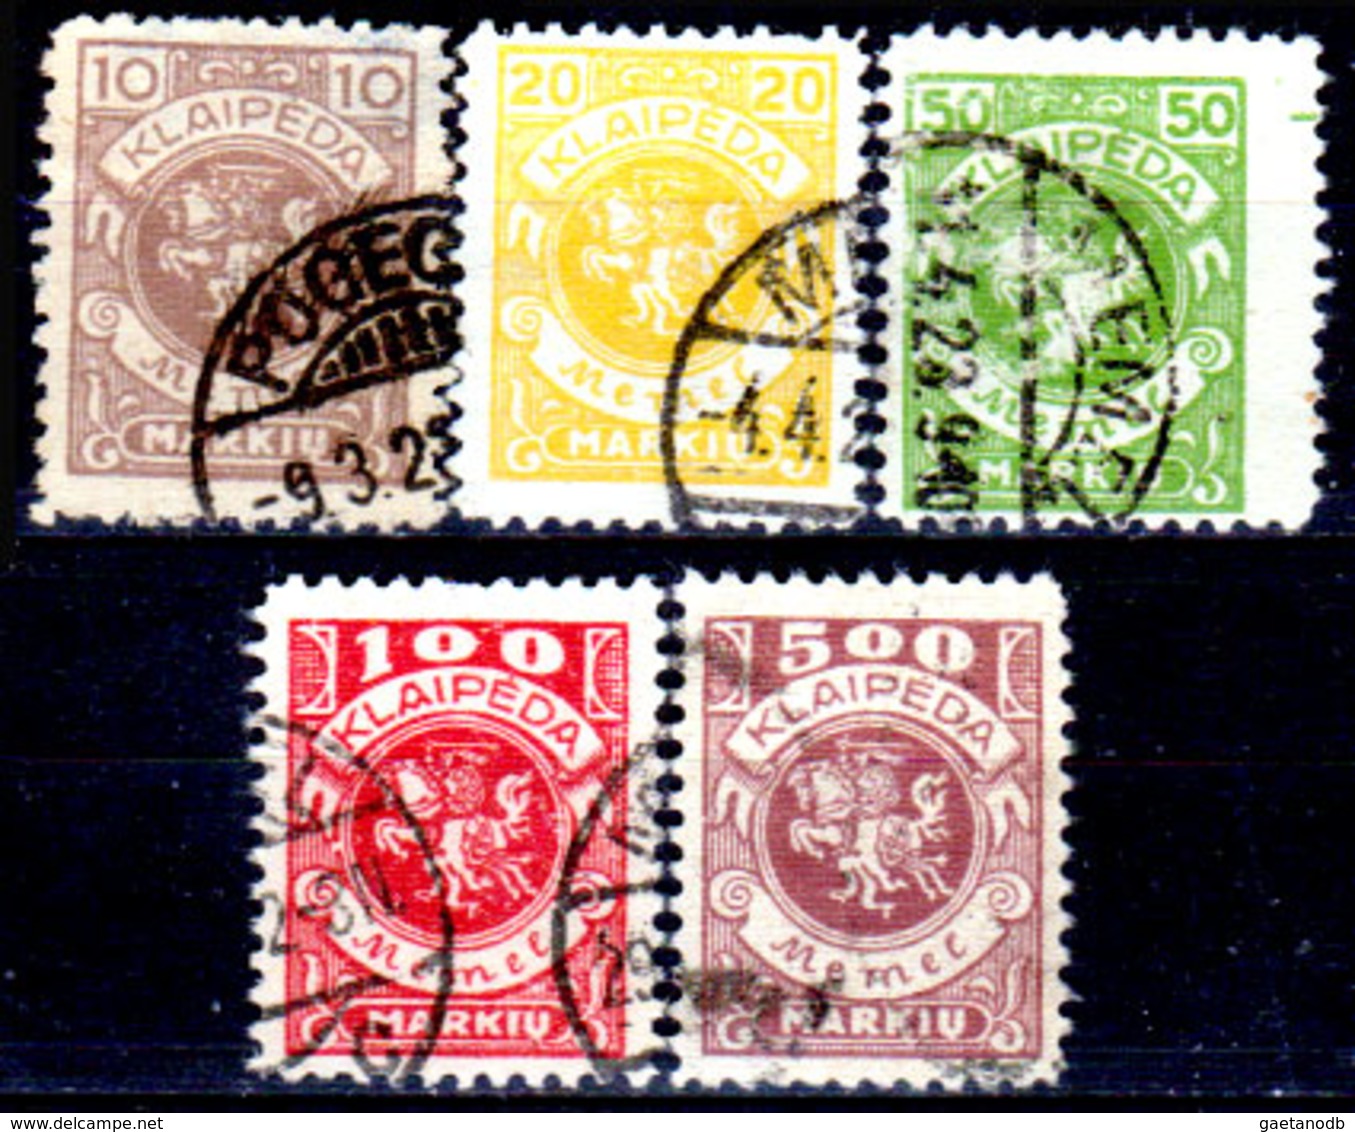 Memel-025 - Emissione 1923 (o) Used - Senza Difetti Occulti.) - Used Stamps